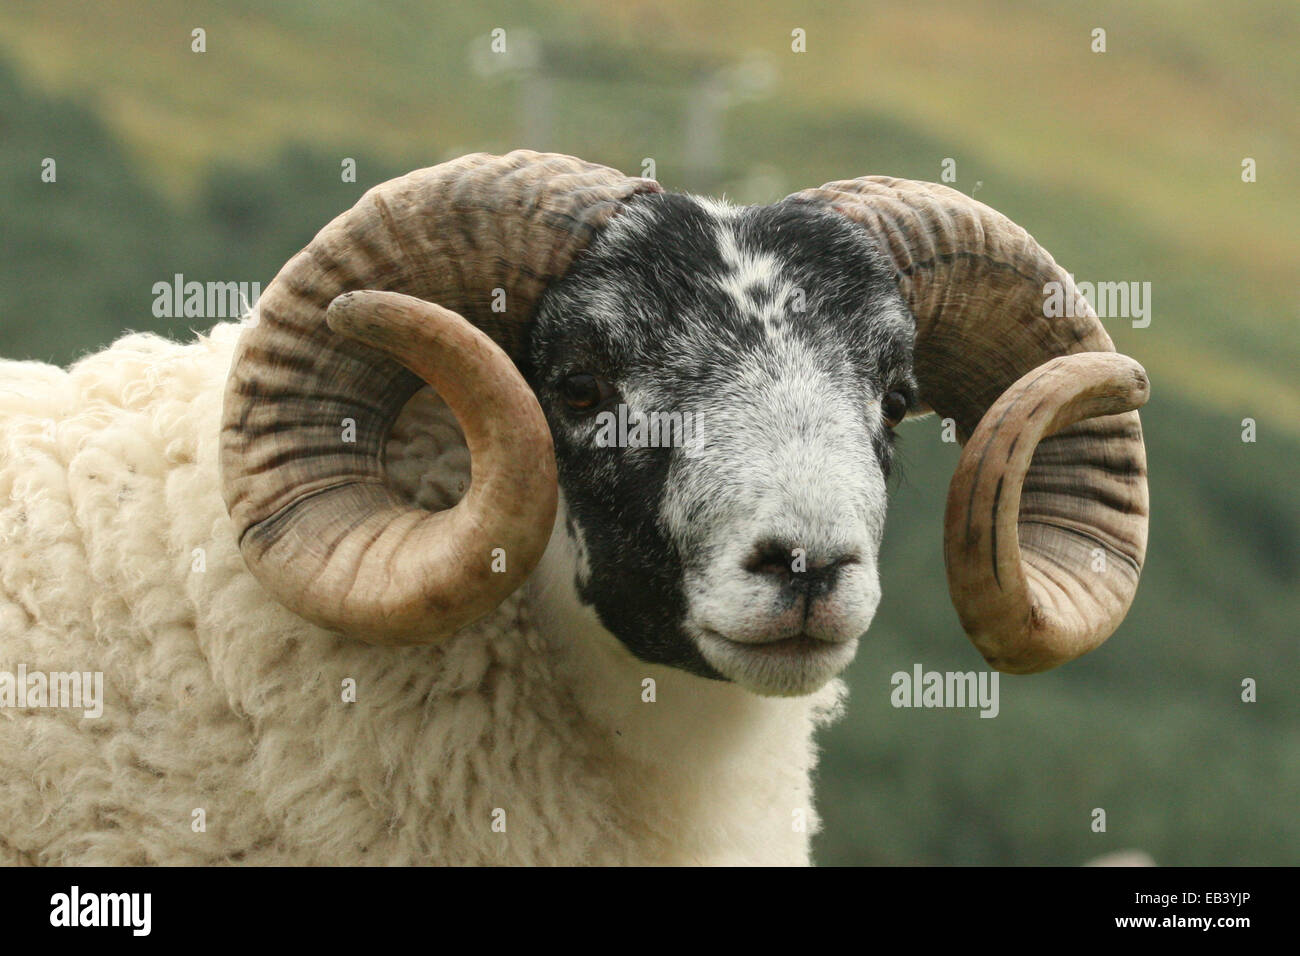 Ram's head Stock Photo - Alamy